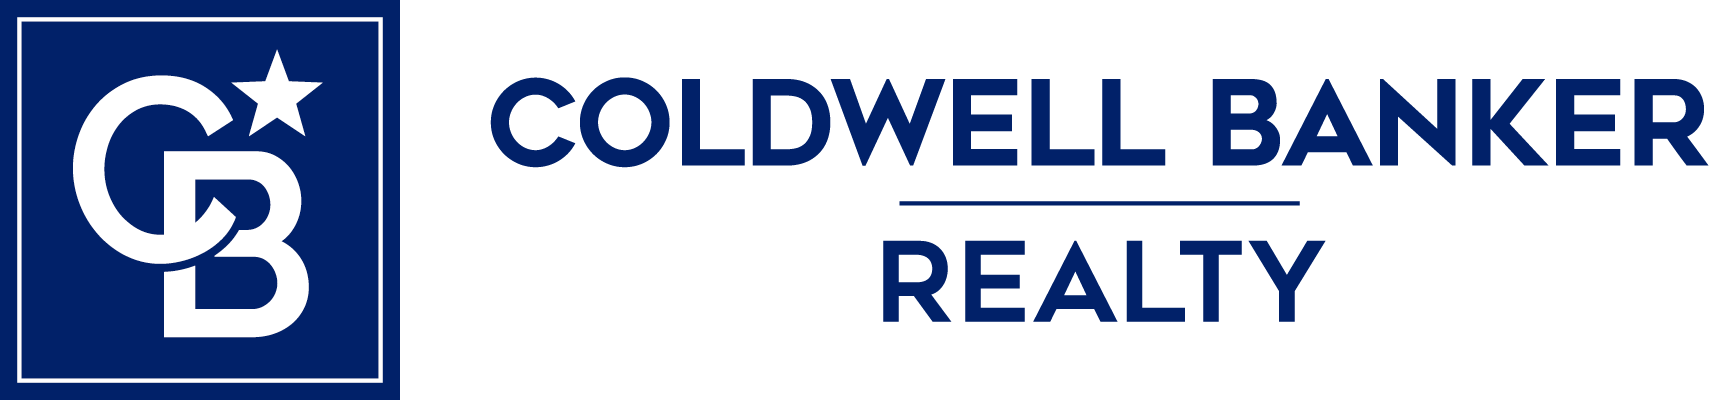 Coldwell Banker Realty - Newburyport